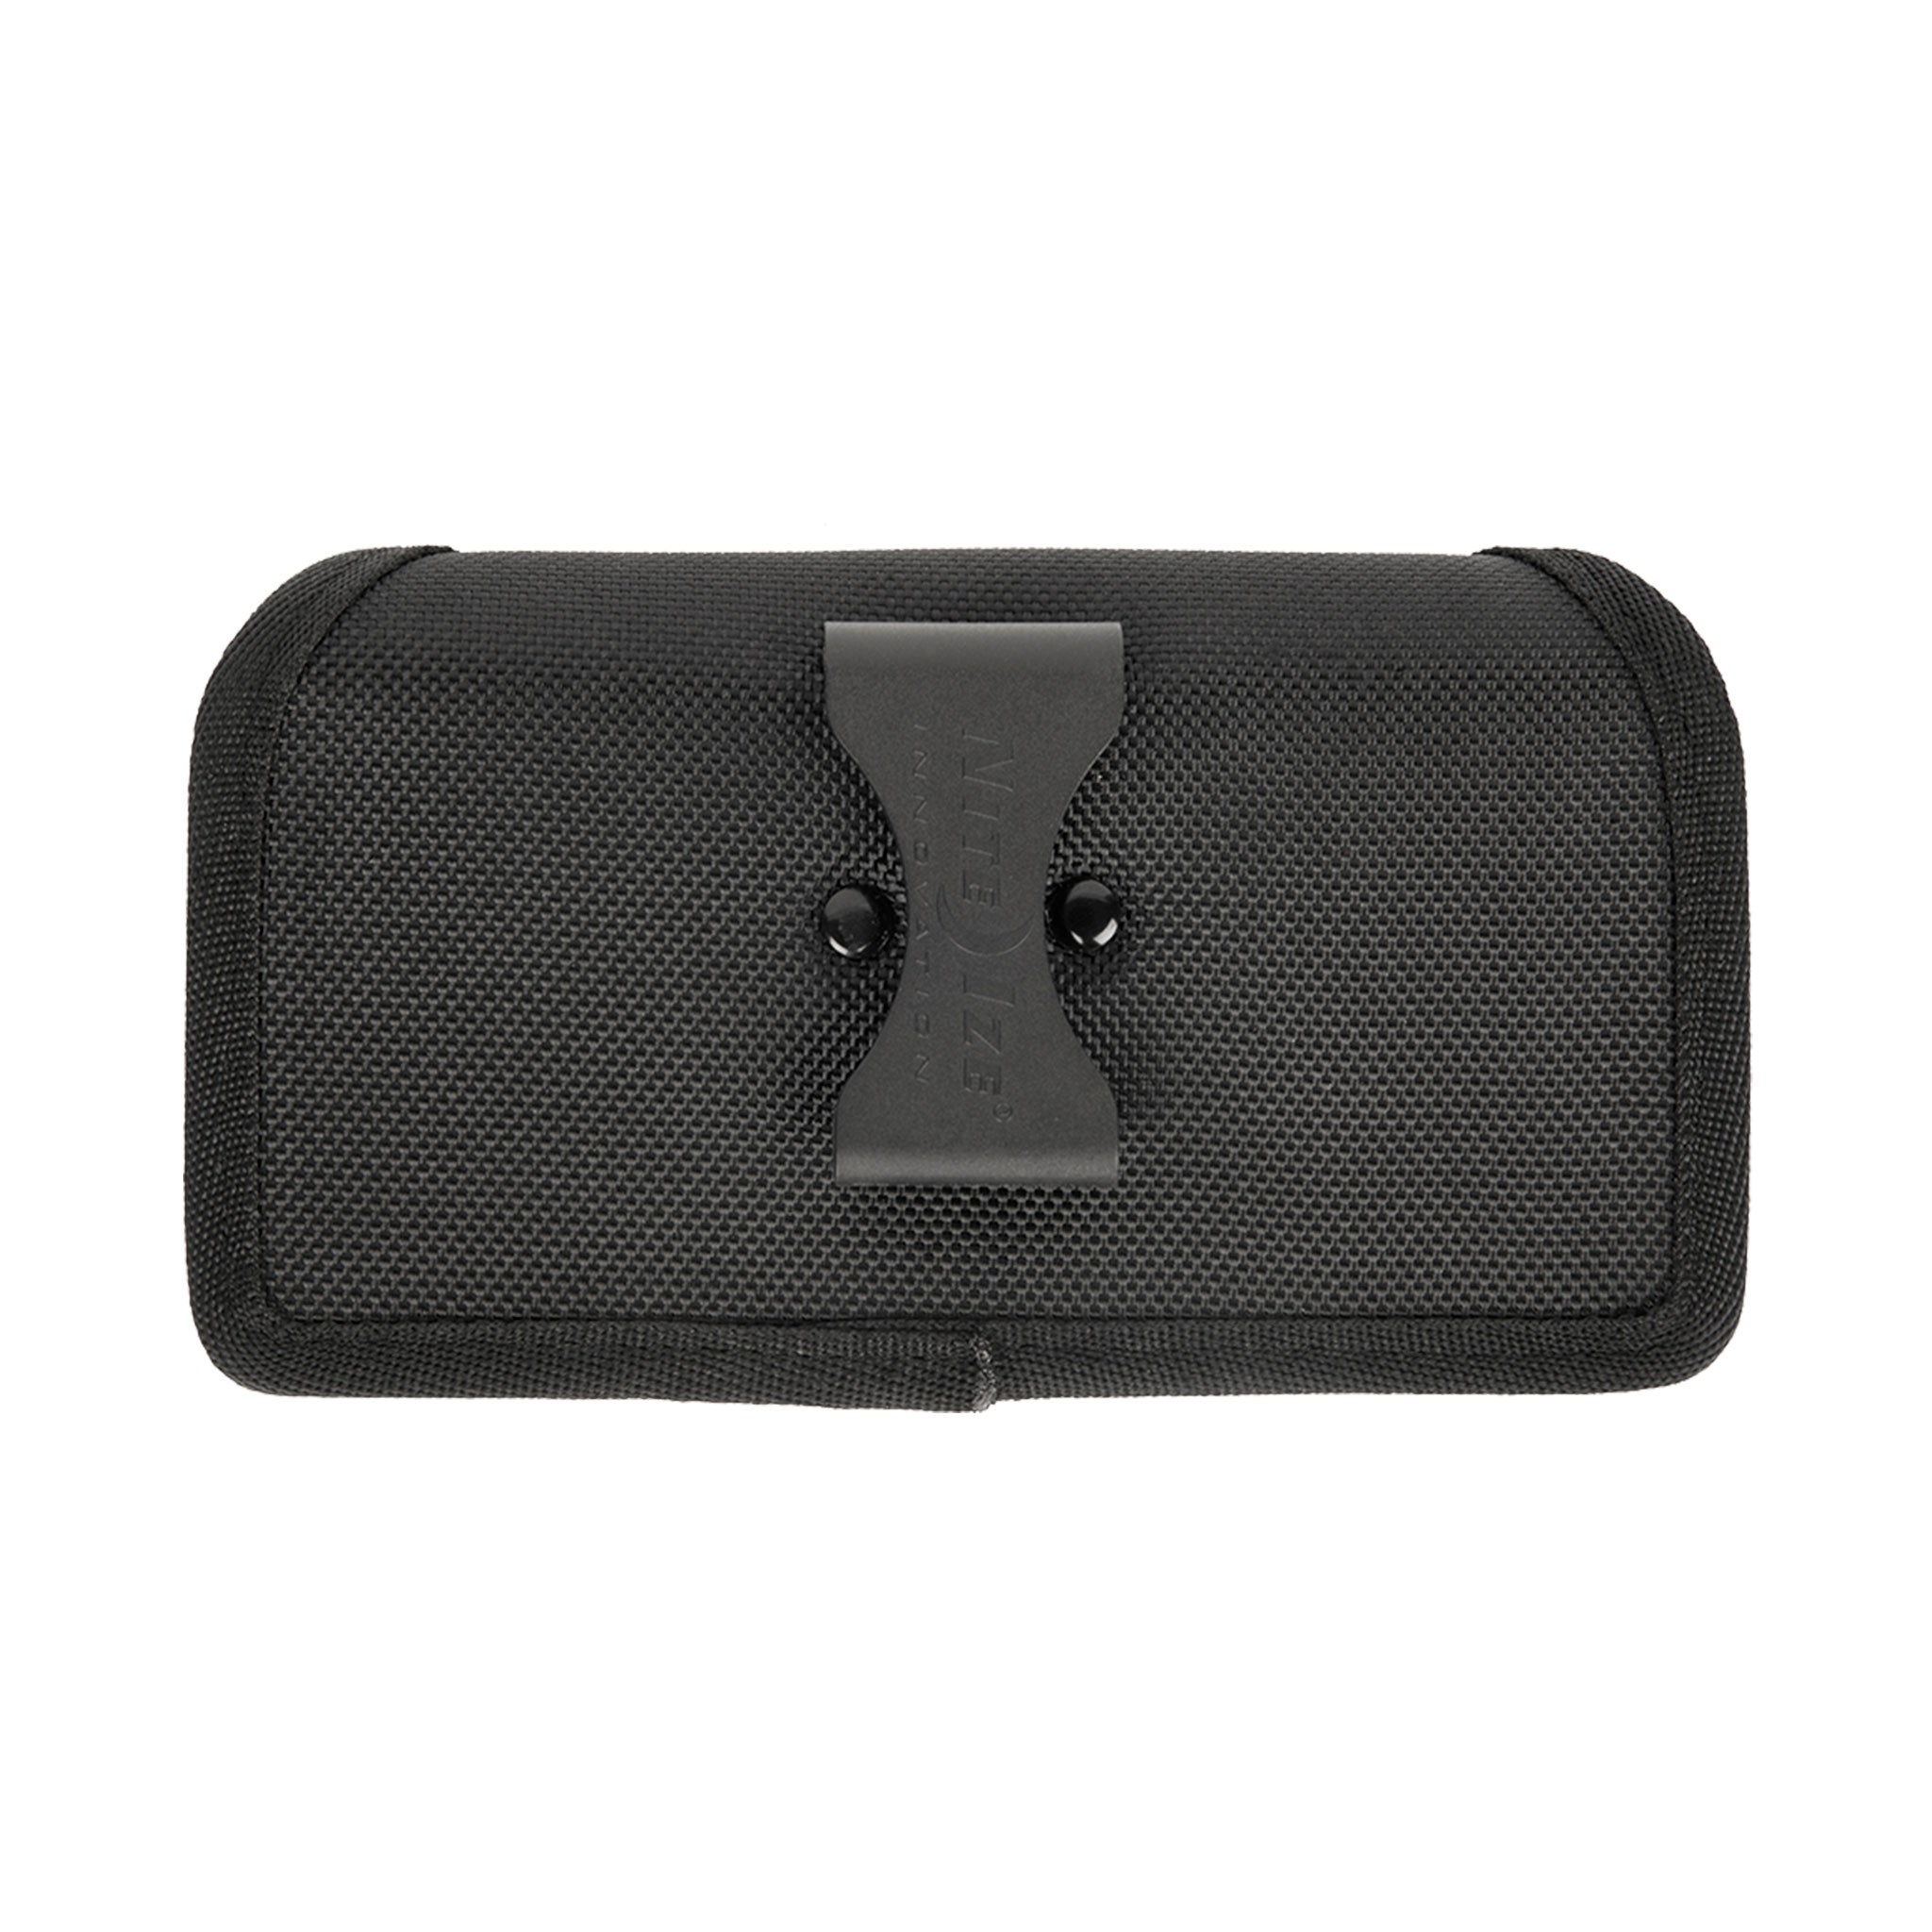 Nite Ize - Clip Case Hardshell Horizontal Rugged Holster For Xl Phones - Black